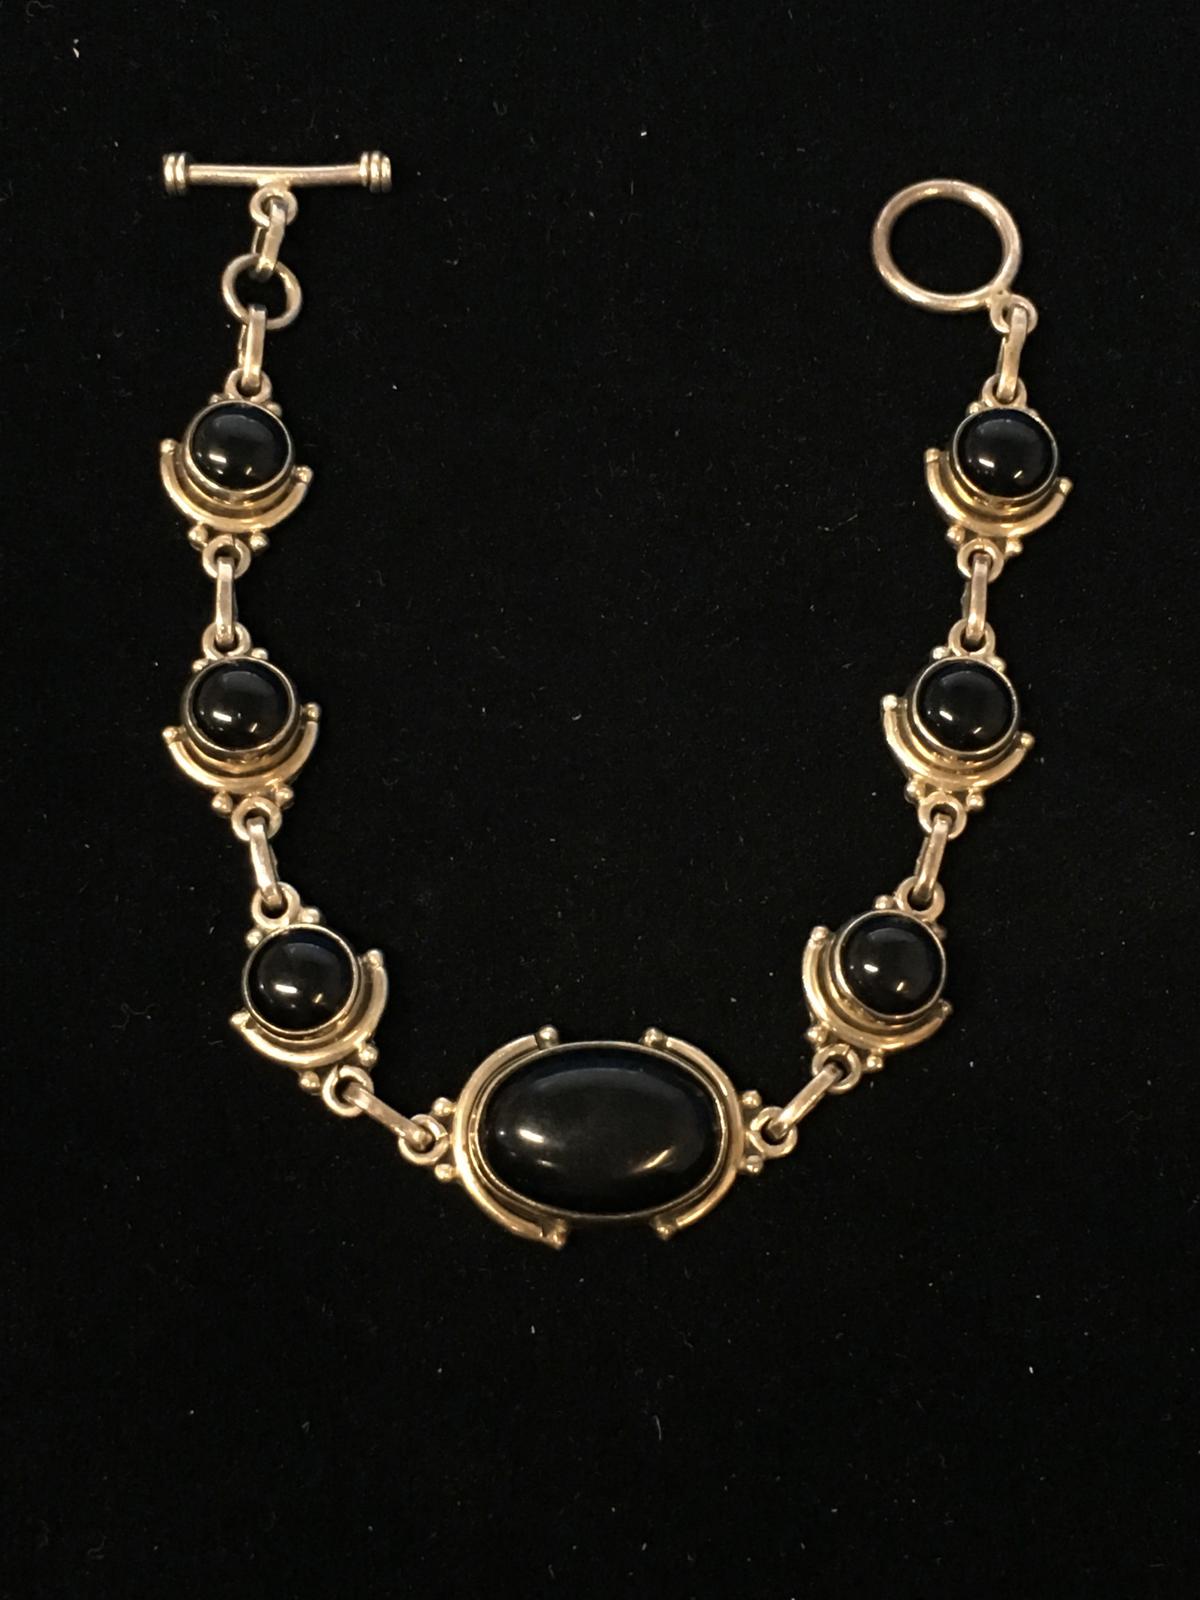 Bali Style Sterling Silver & Black Onyx 7.5" Toggle Bracelet - 20 Grams